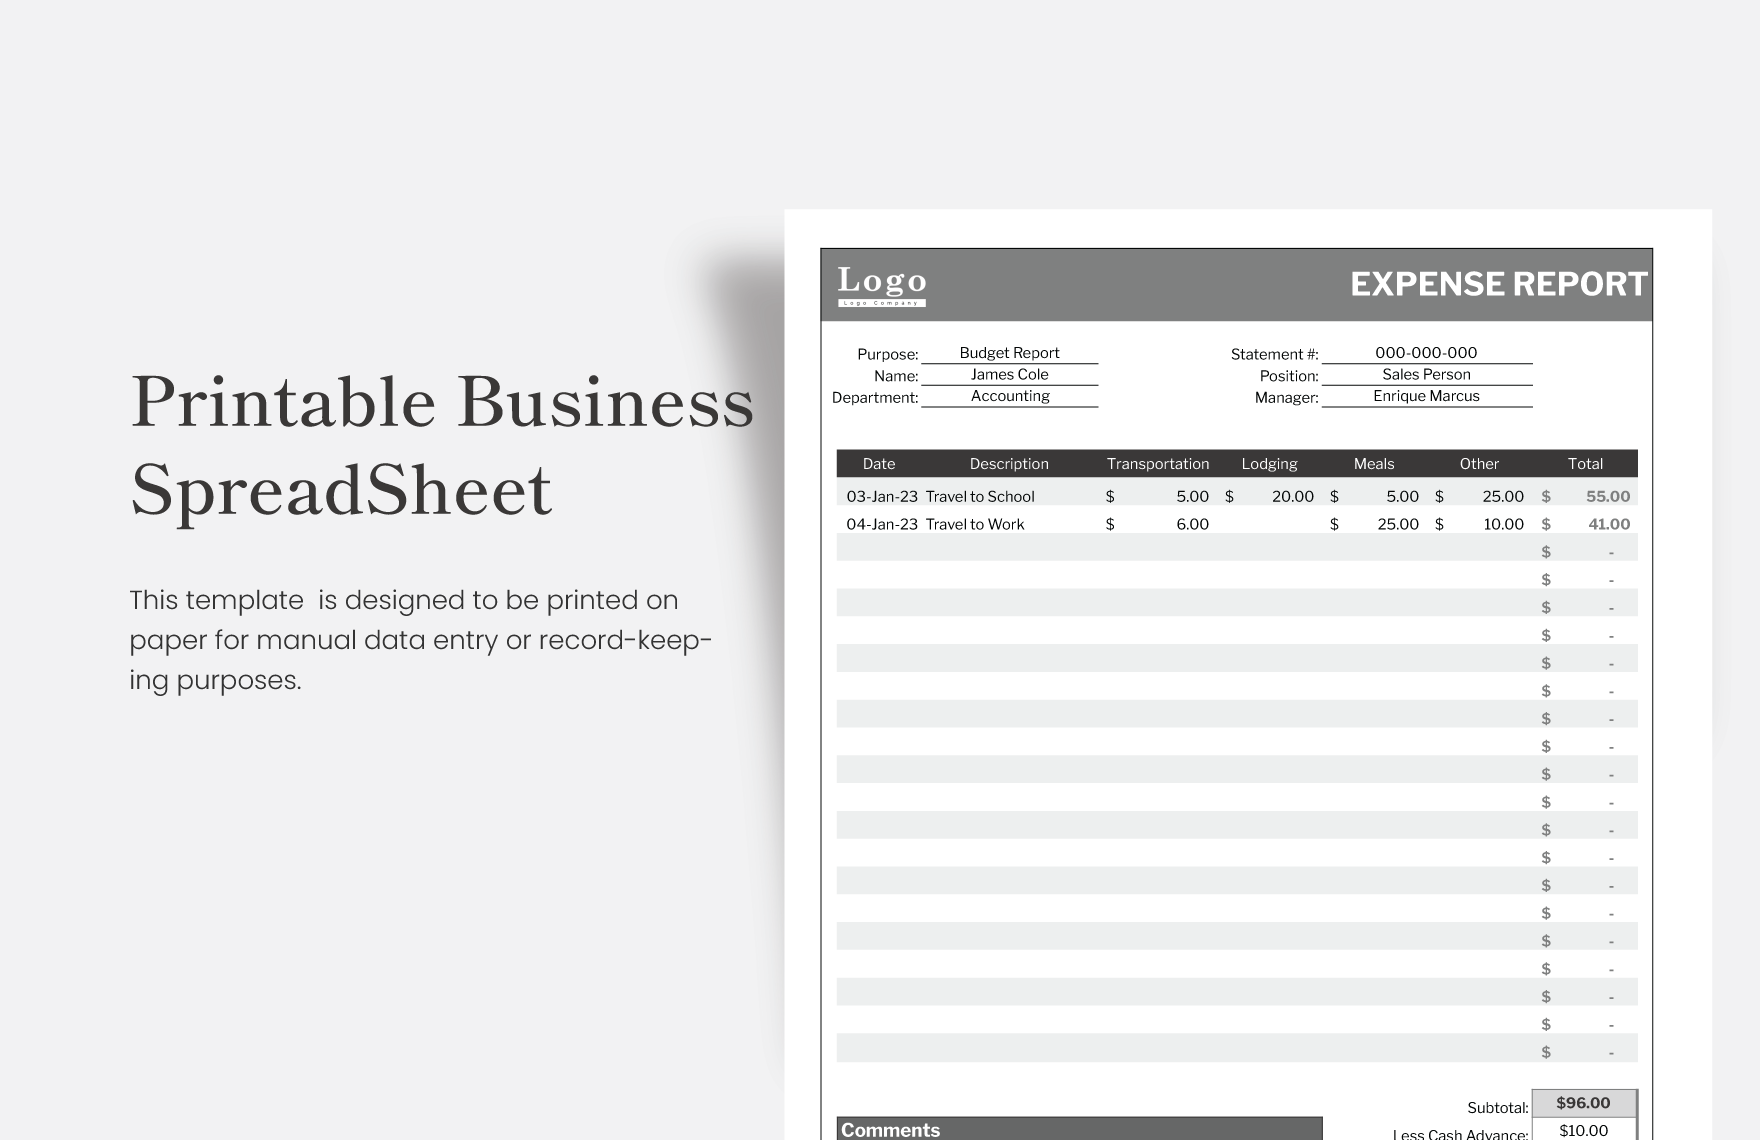 Printable Business Spreadsheet